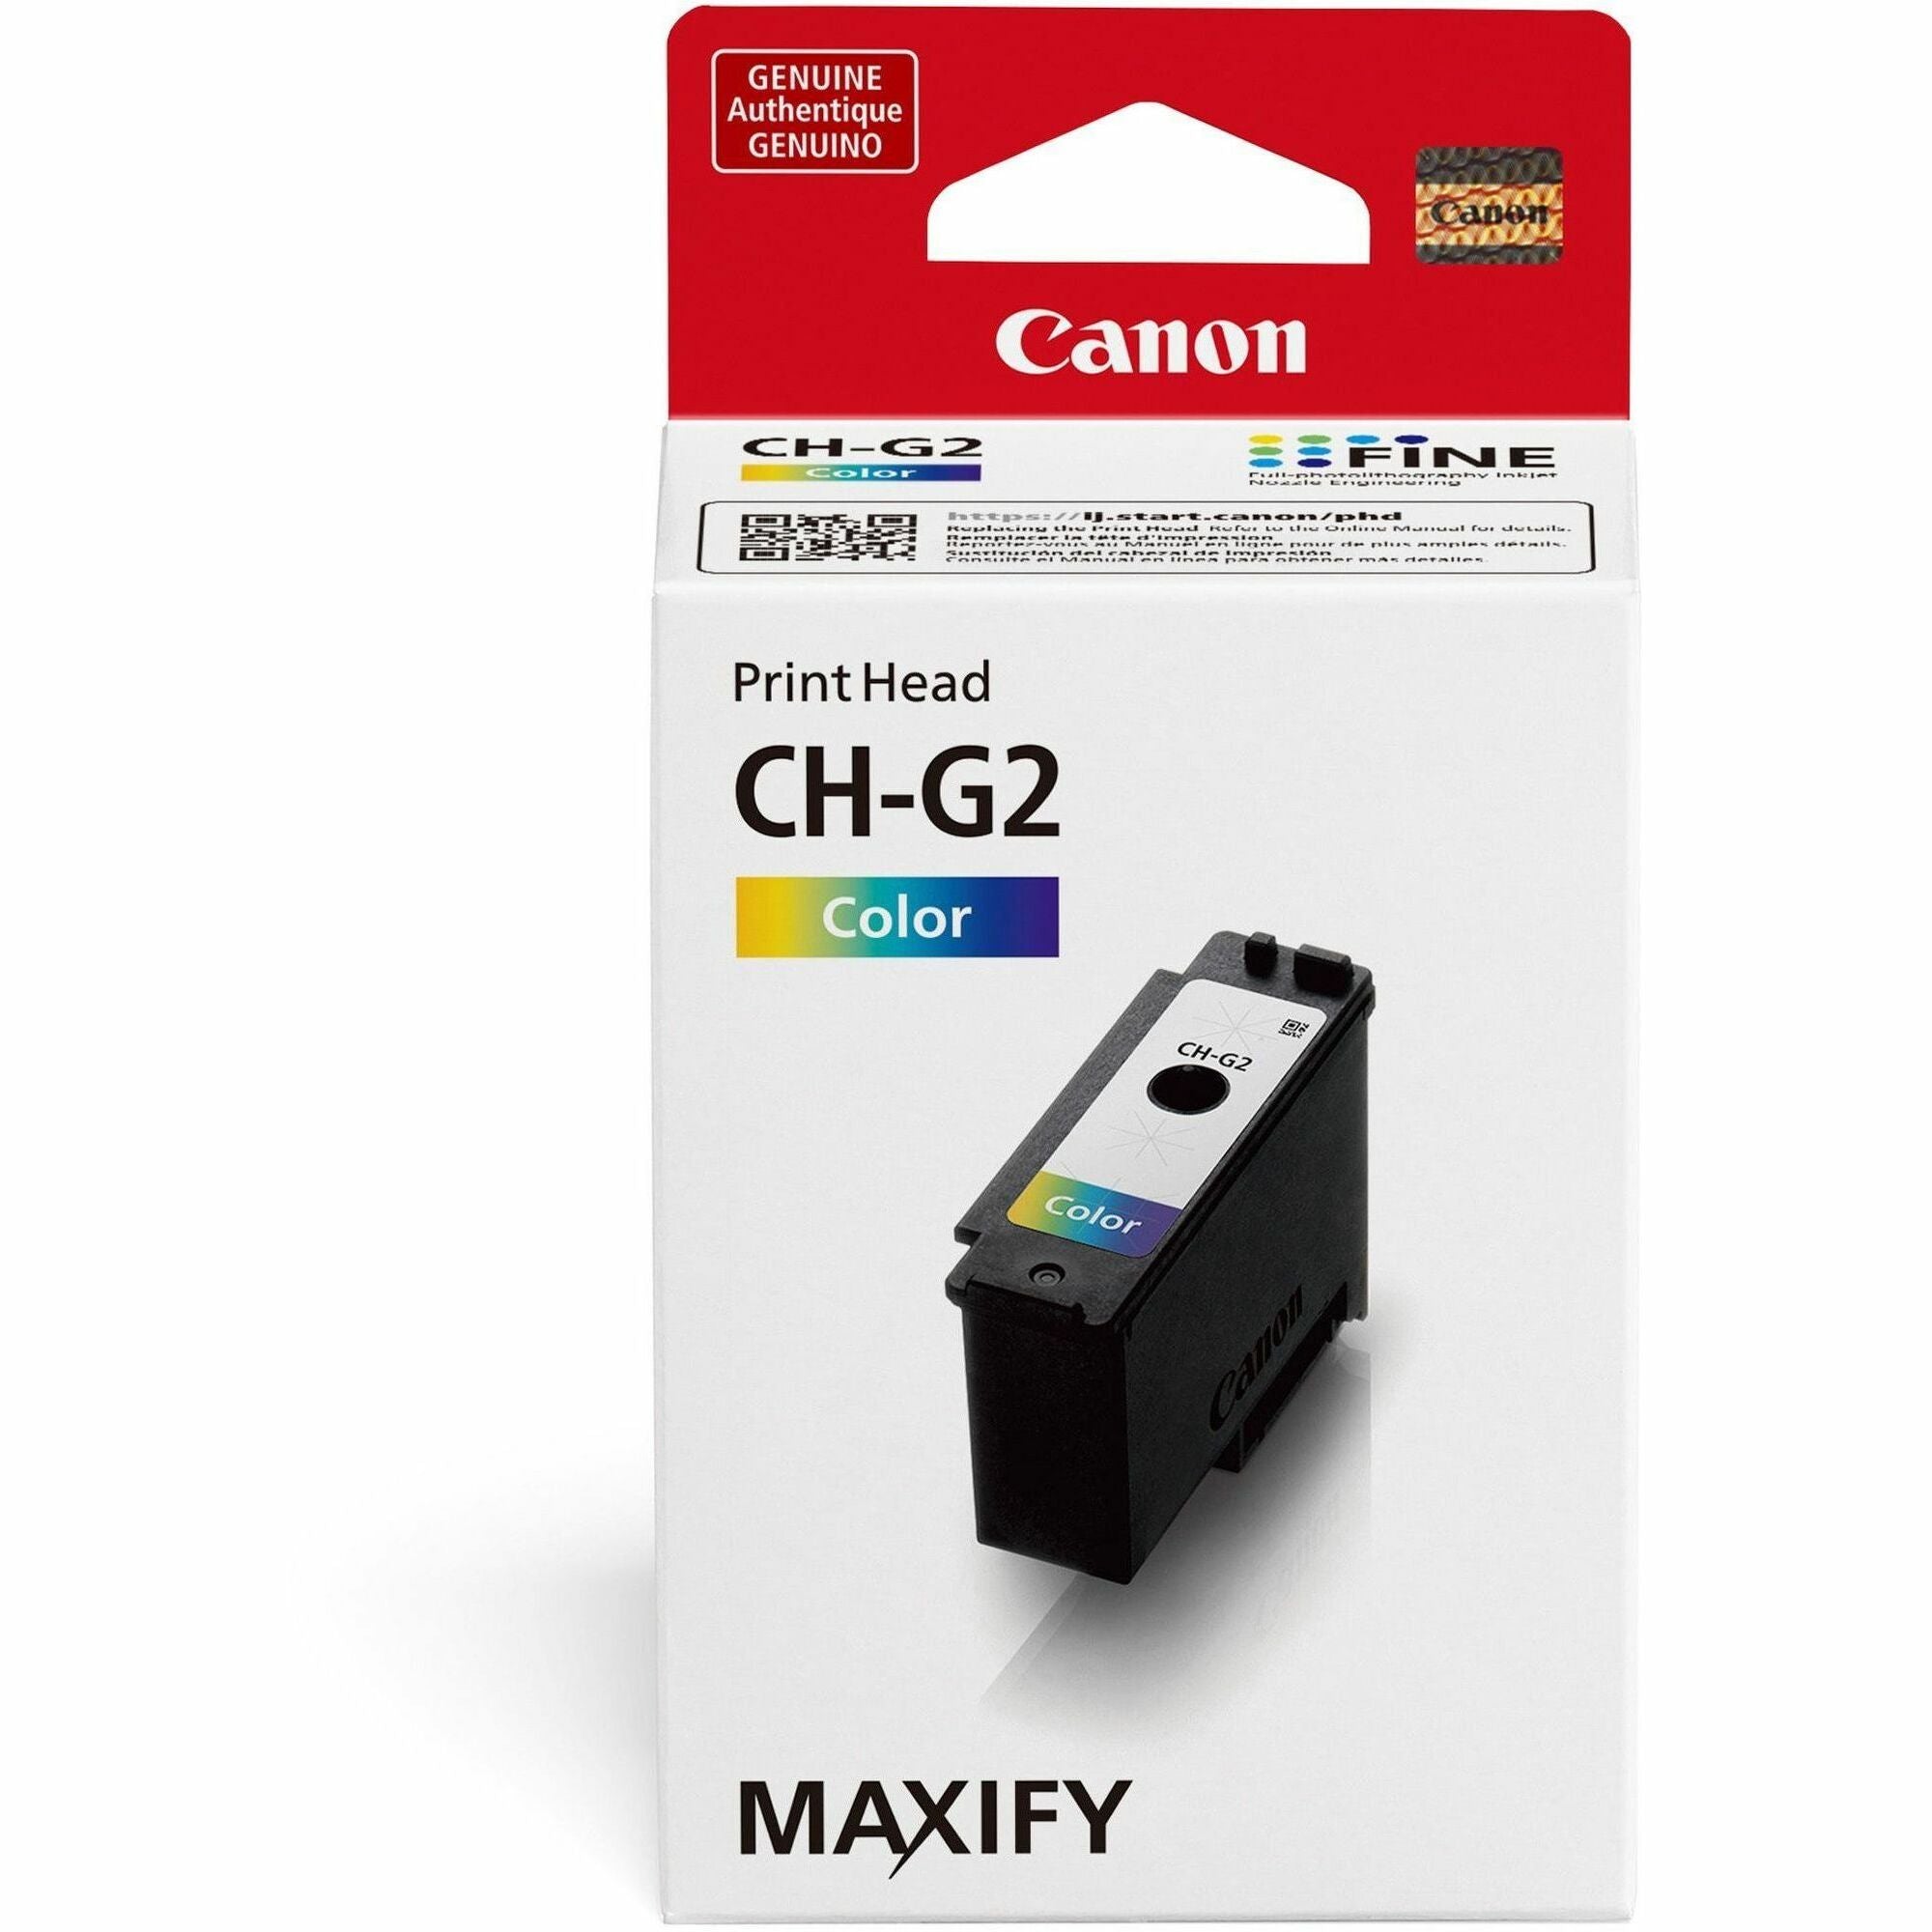 canon-ch-g2-original-inkjet-printhead-black-1-each_cnm6161c002 - 1